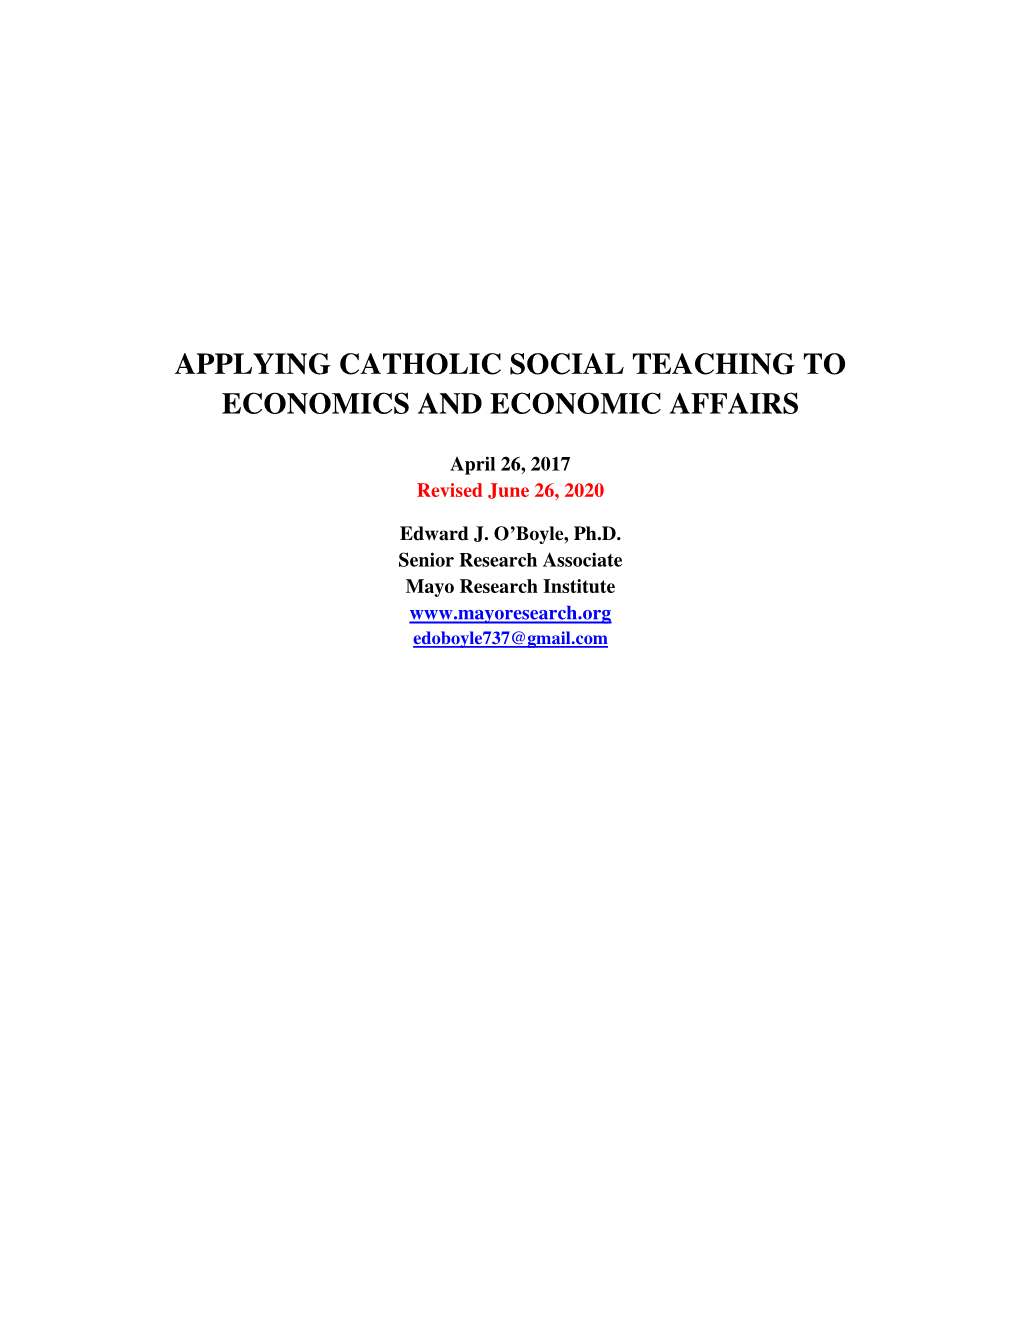 Applying Catholic Social Teaching to Economics and Economic Affairs